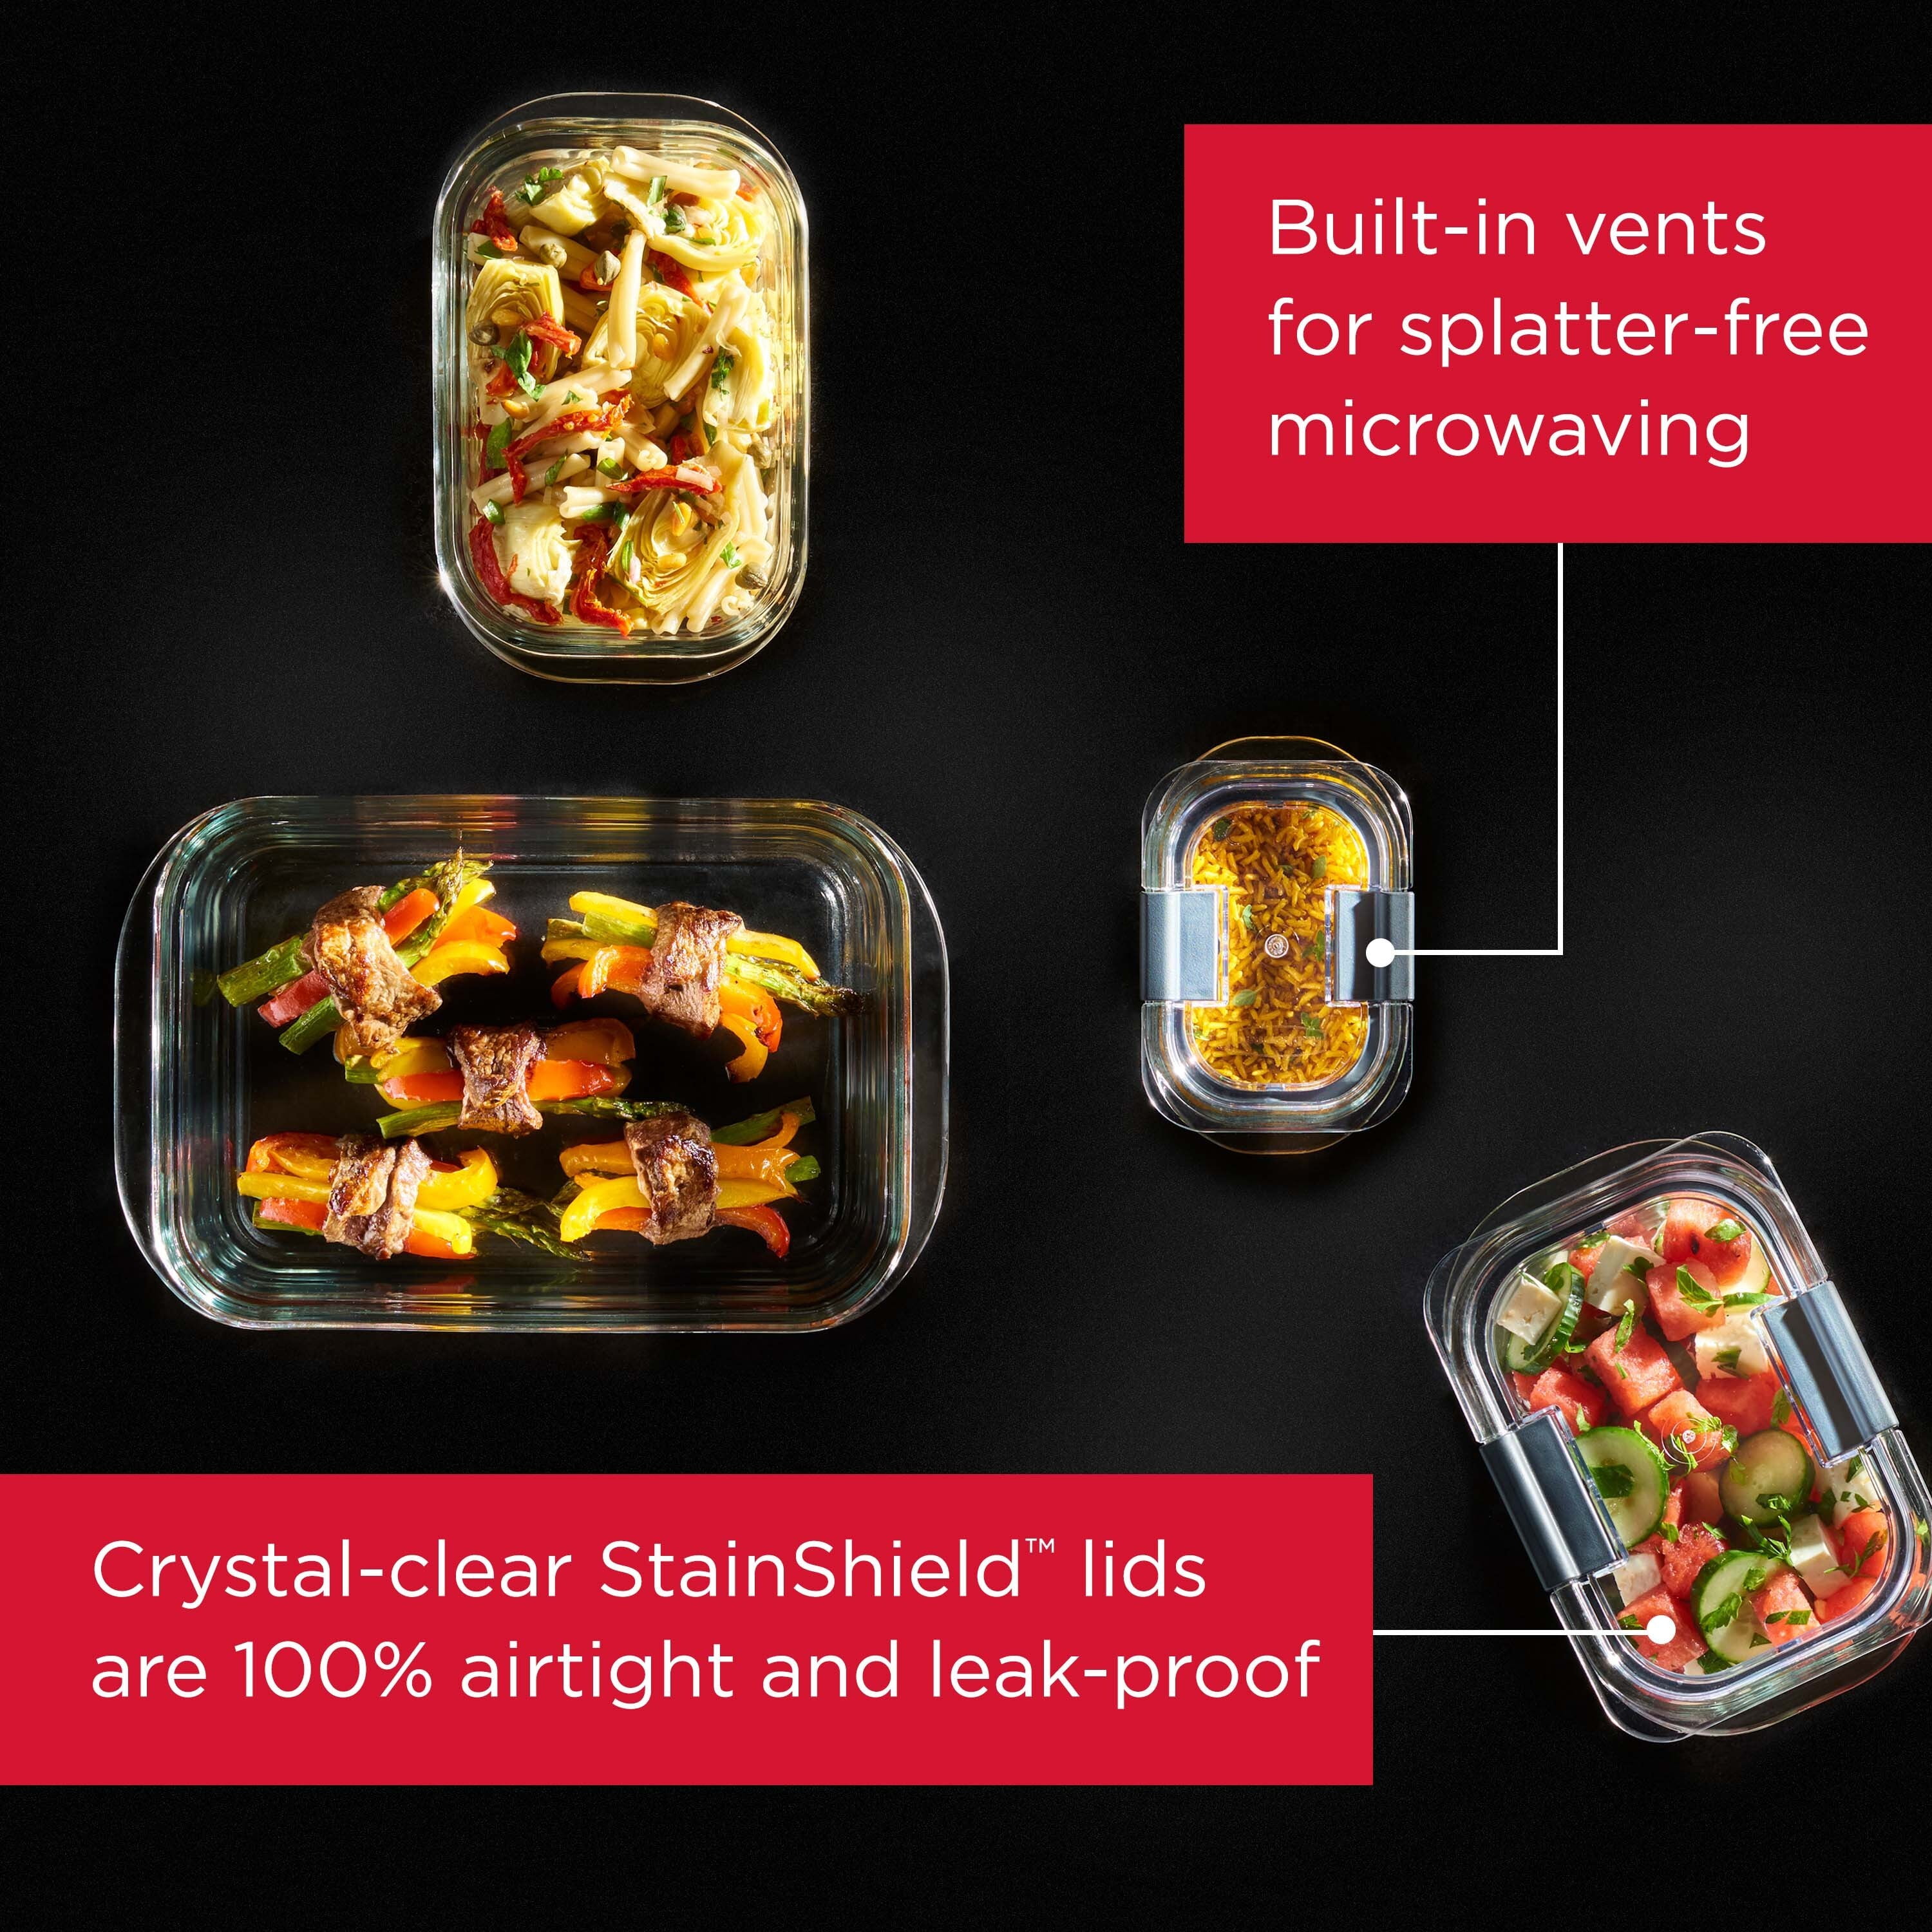 Brilliance™ Glass Food Storage Container, Medium Rectangle